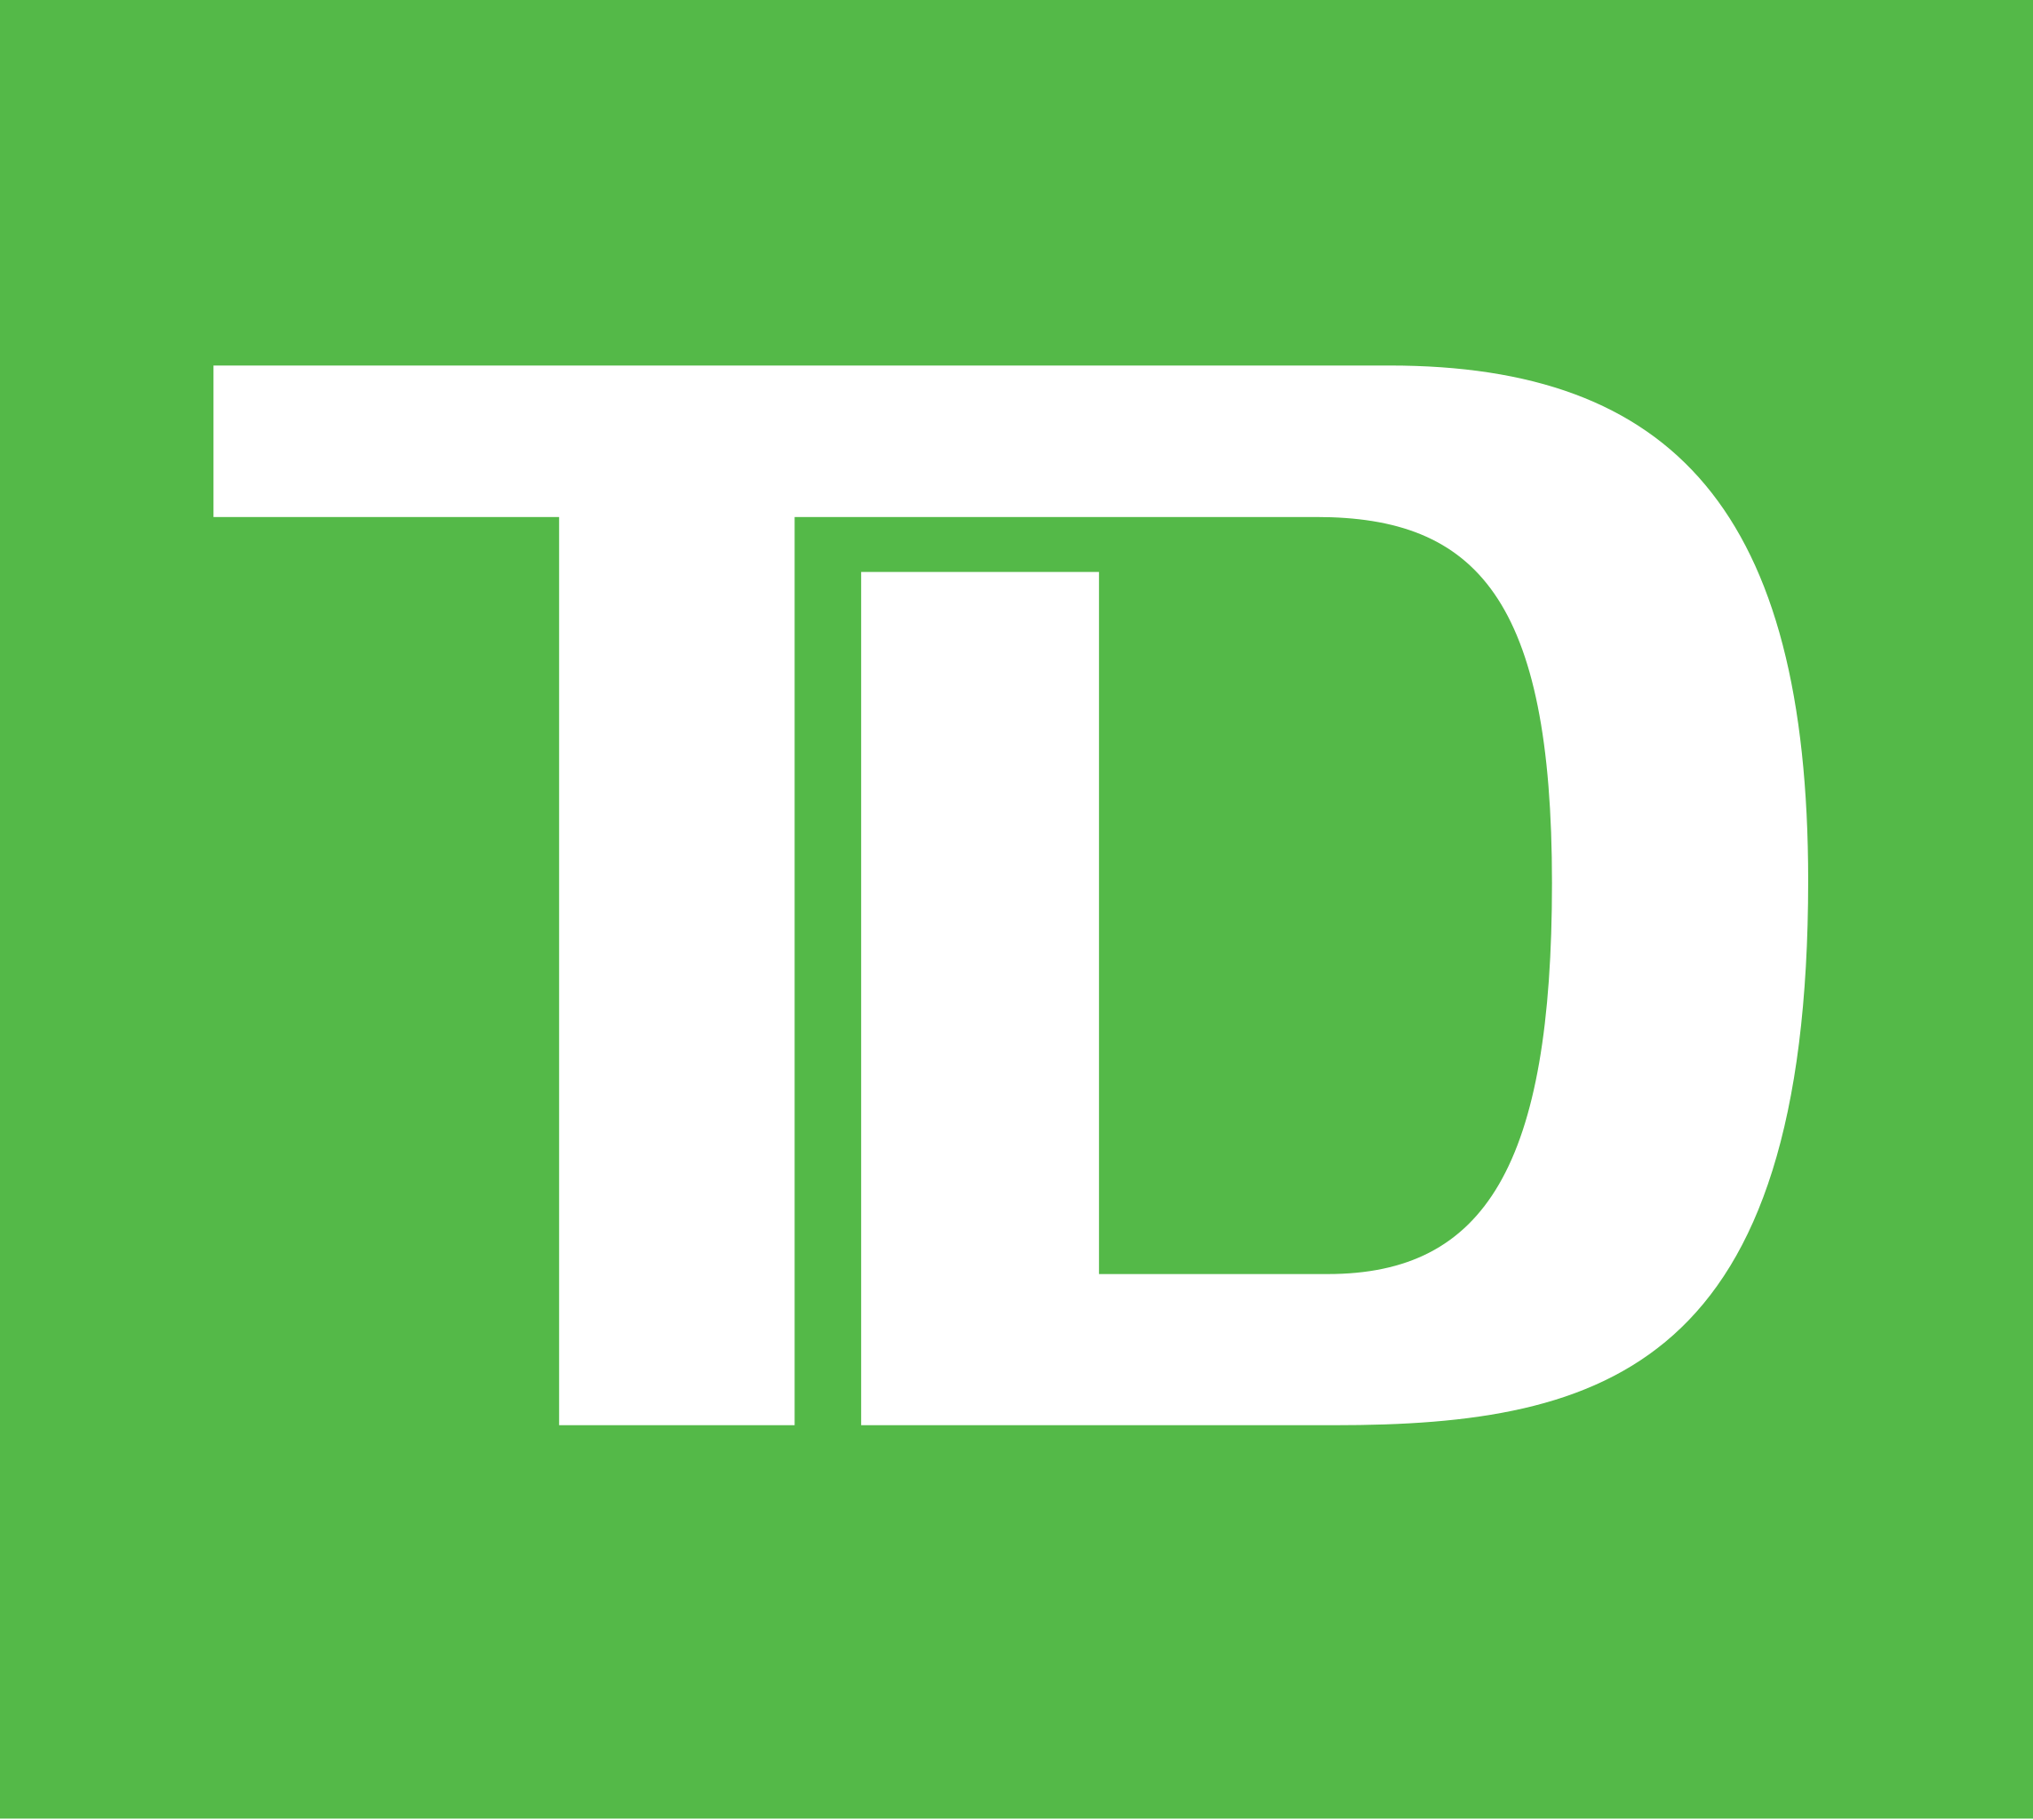 Toronto Dominion Bank logo svg